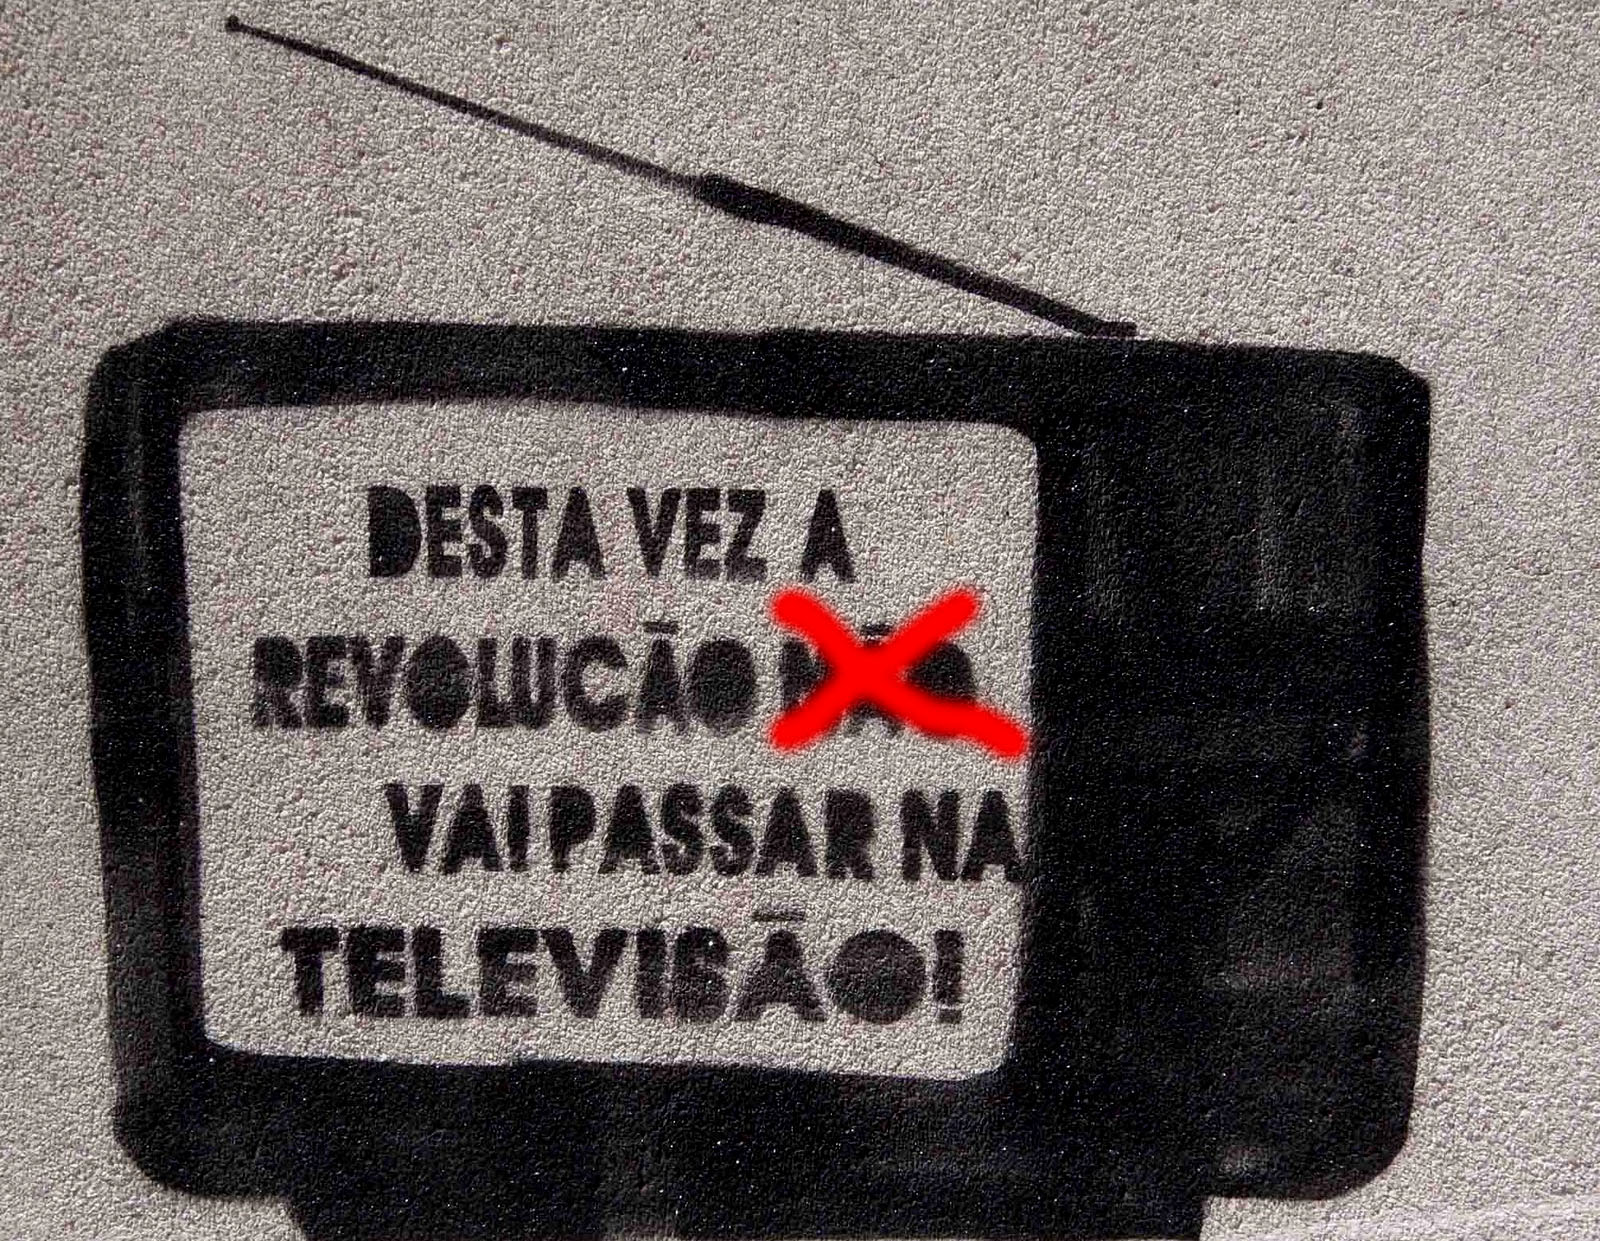 A revolução será televisionada!